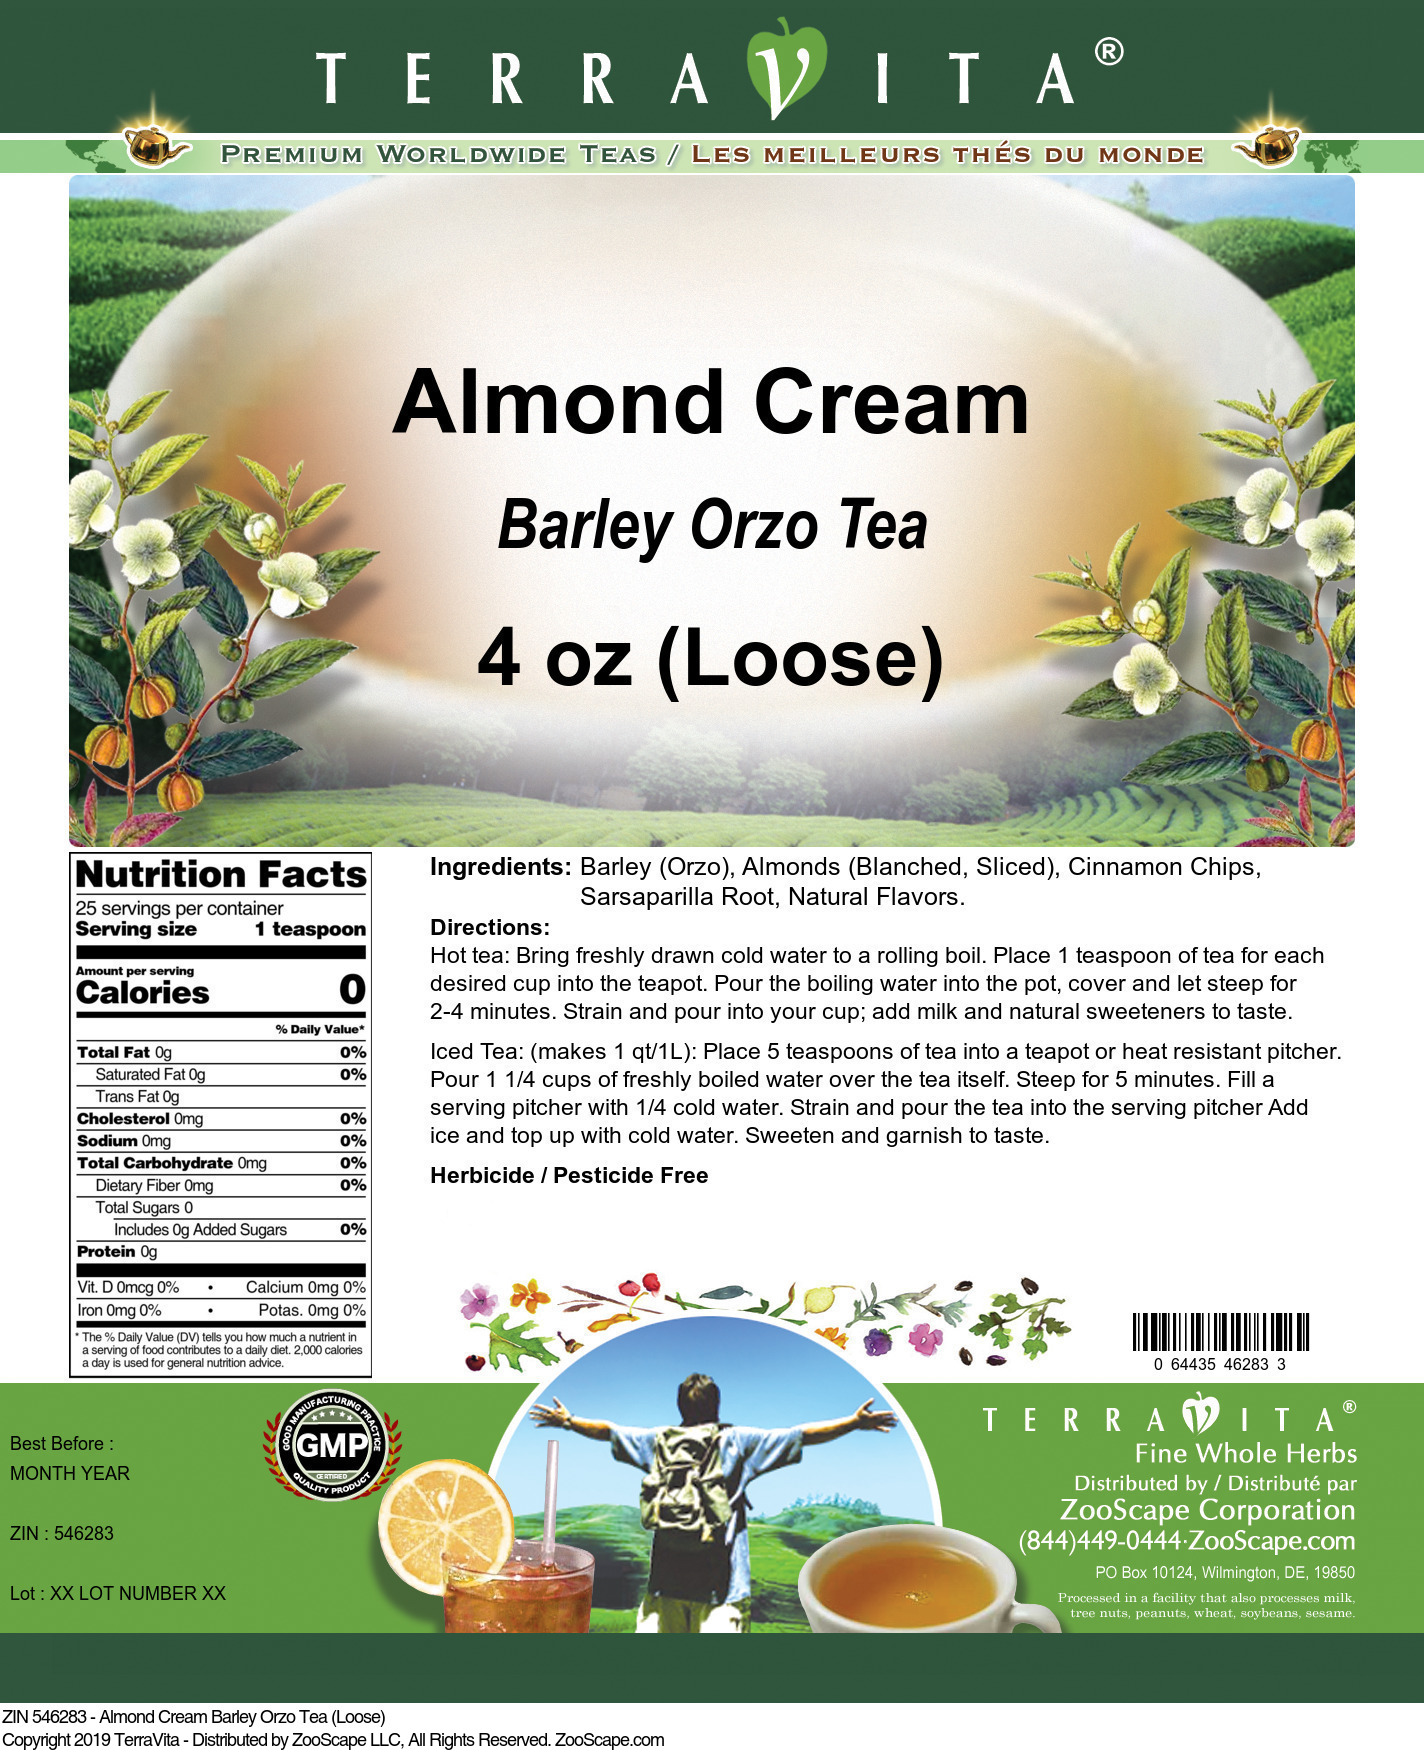 Almond Cream Barley Orzo Tea (Loose) - Label